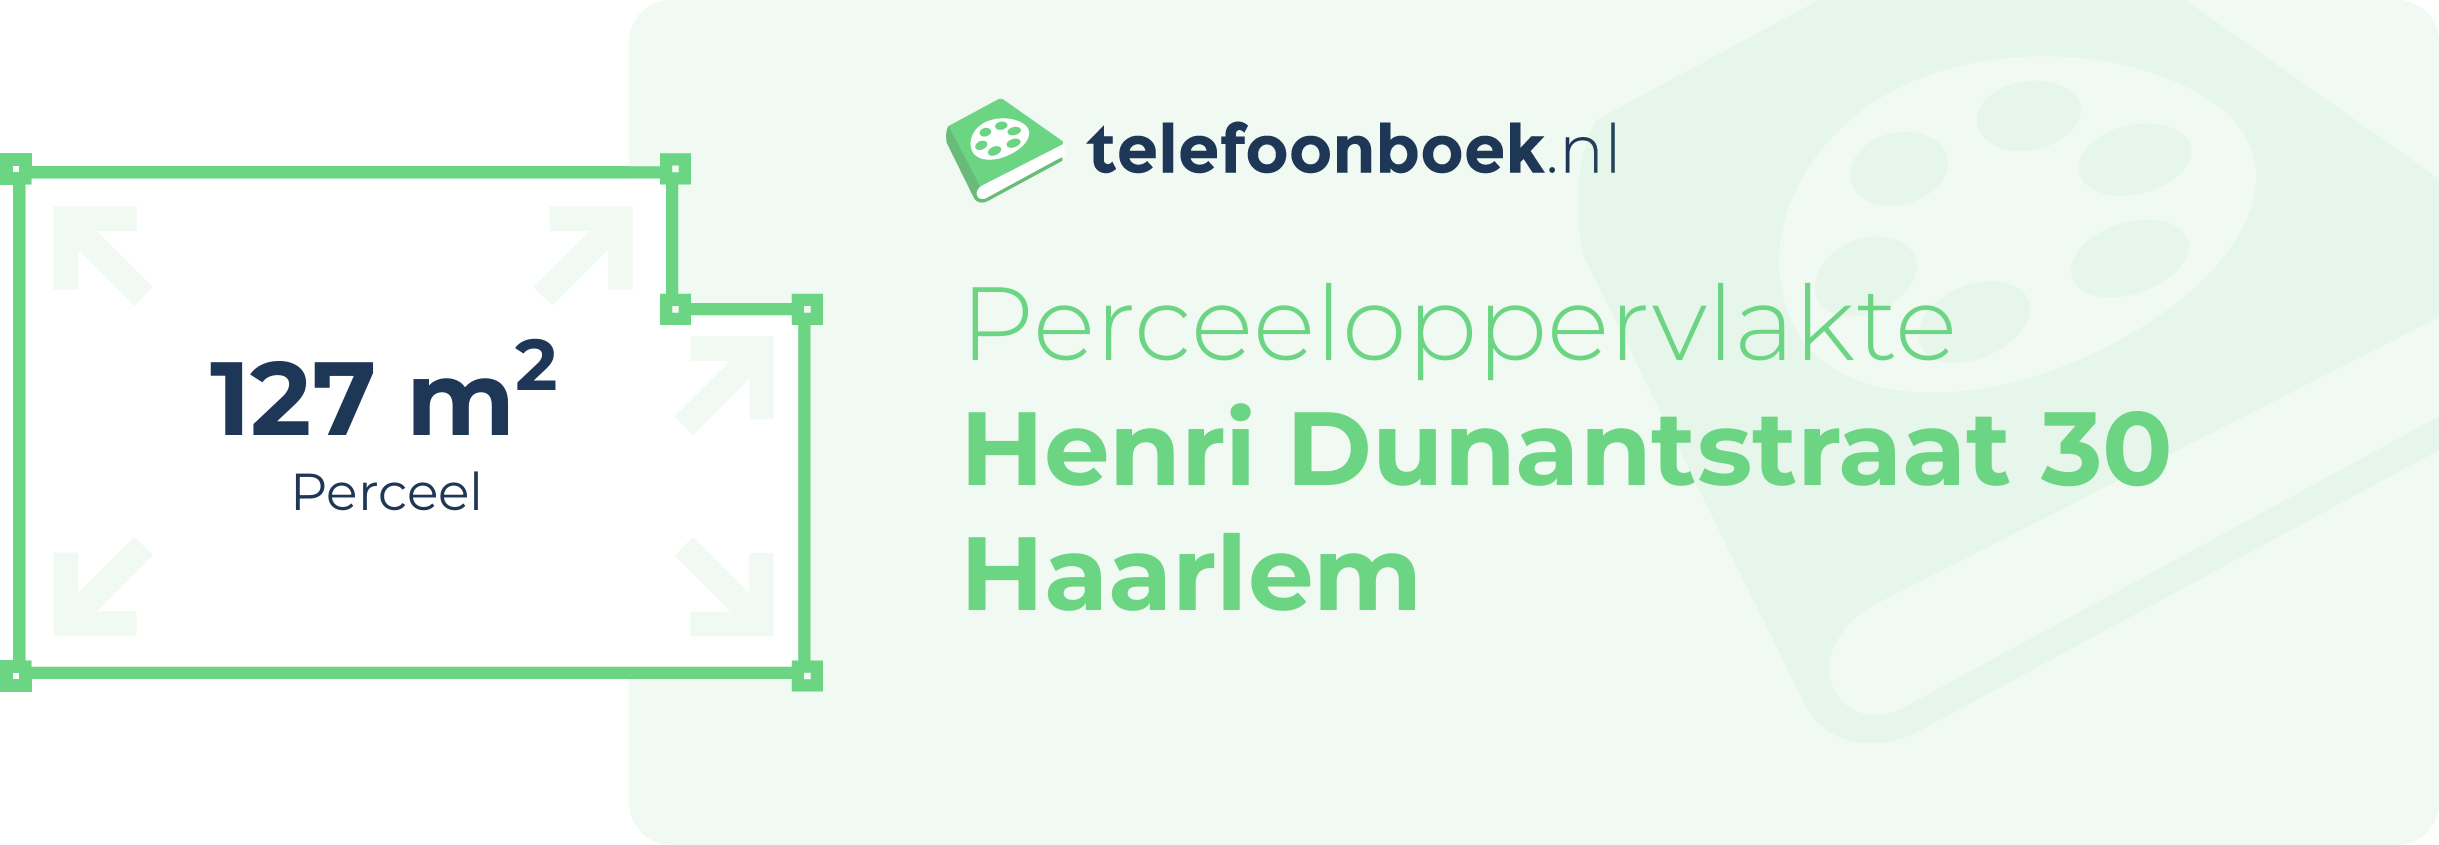 Perceeloppervlakte Henri Dunantstraat 30 Haarlem